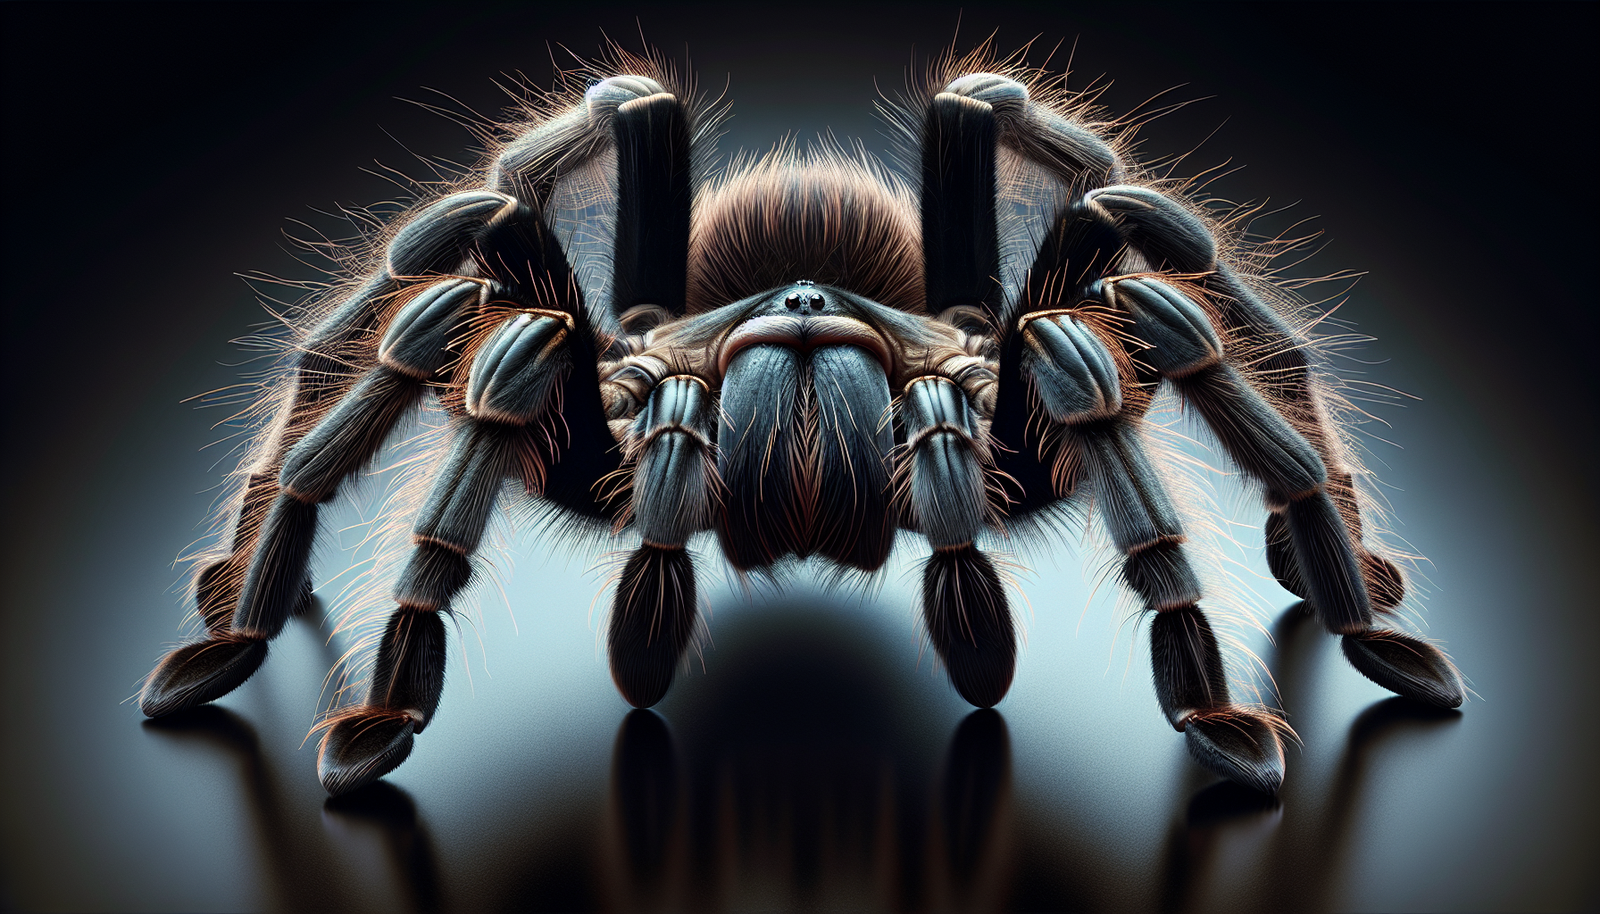 Can Tarantulas Face Threats From Larger Arachnid Species Like Solifuges?